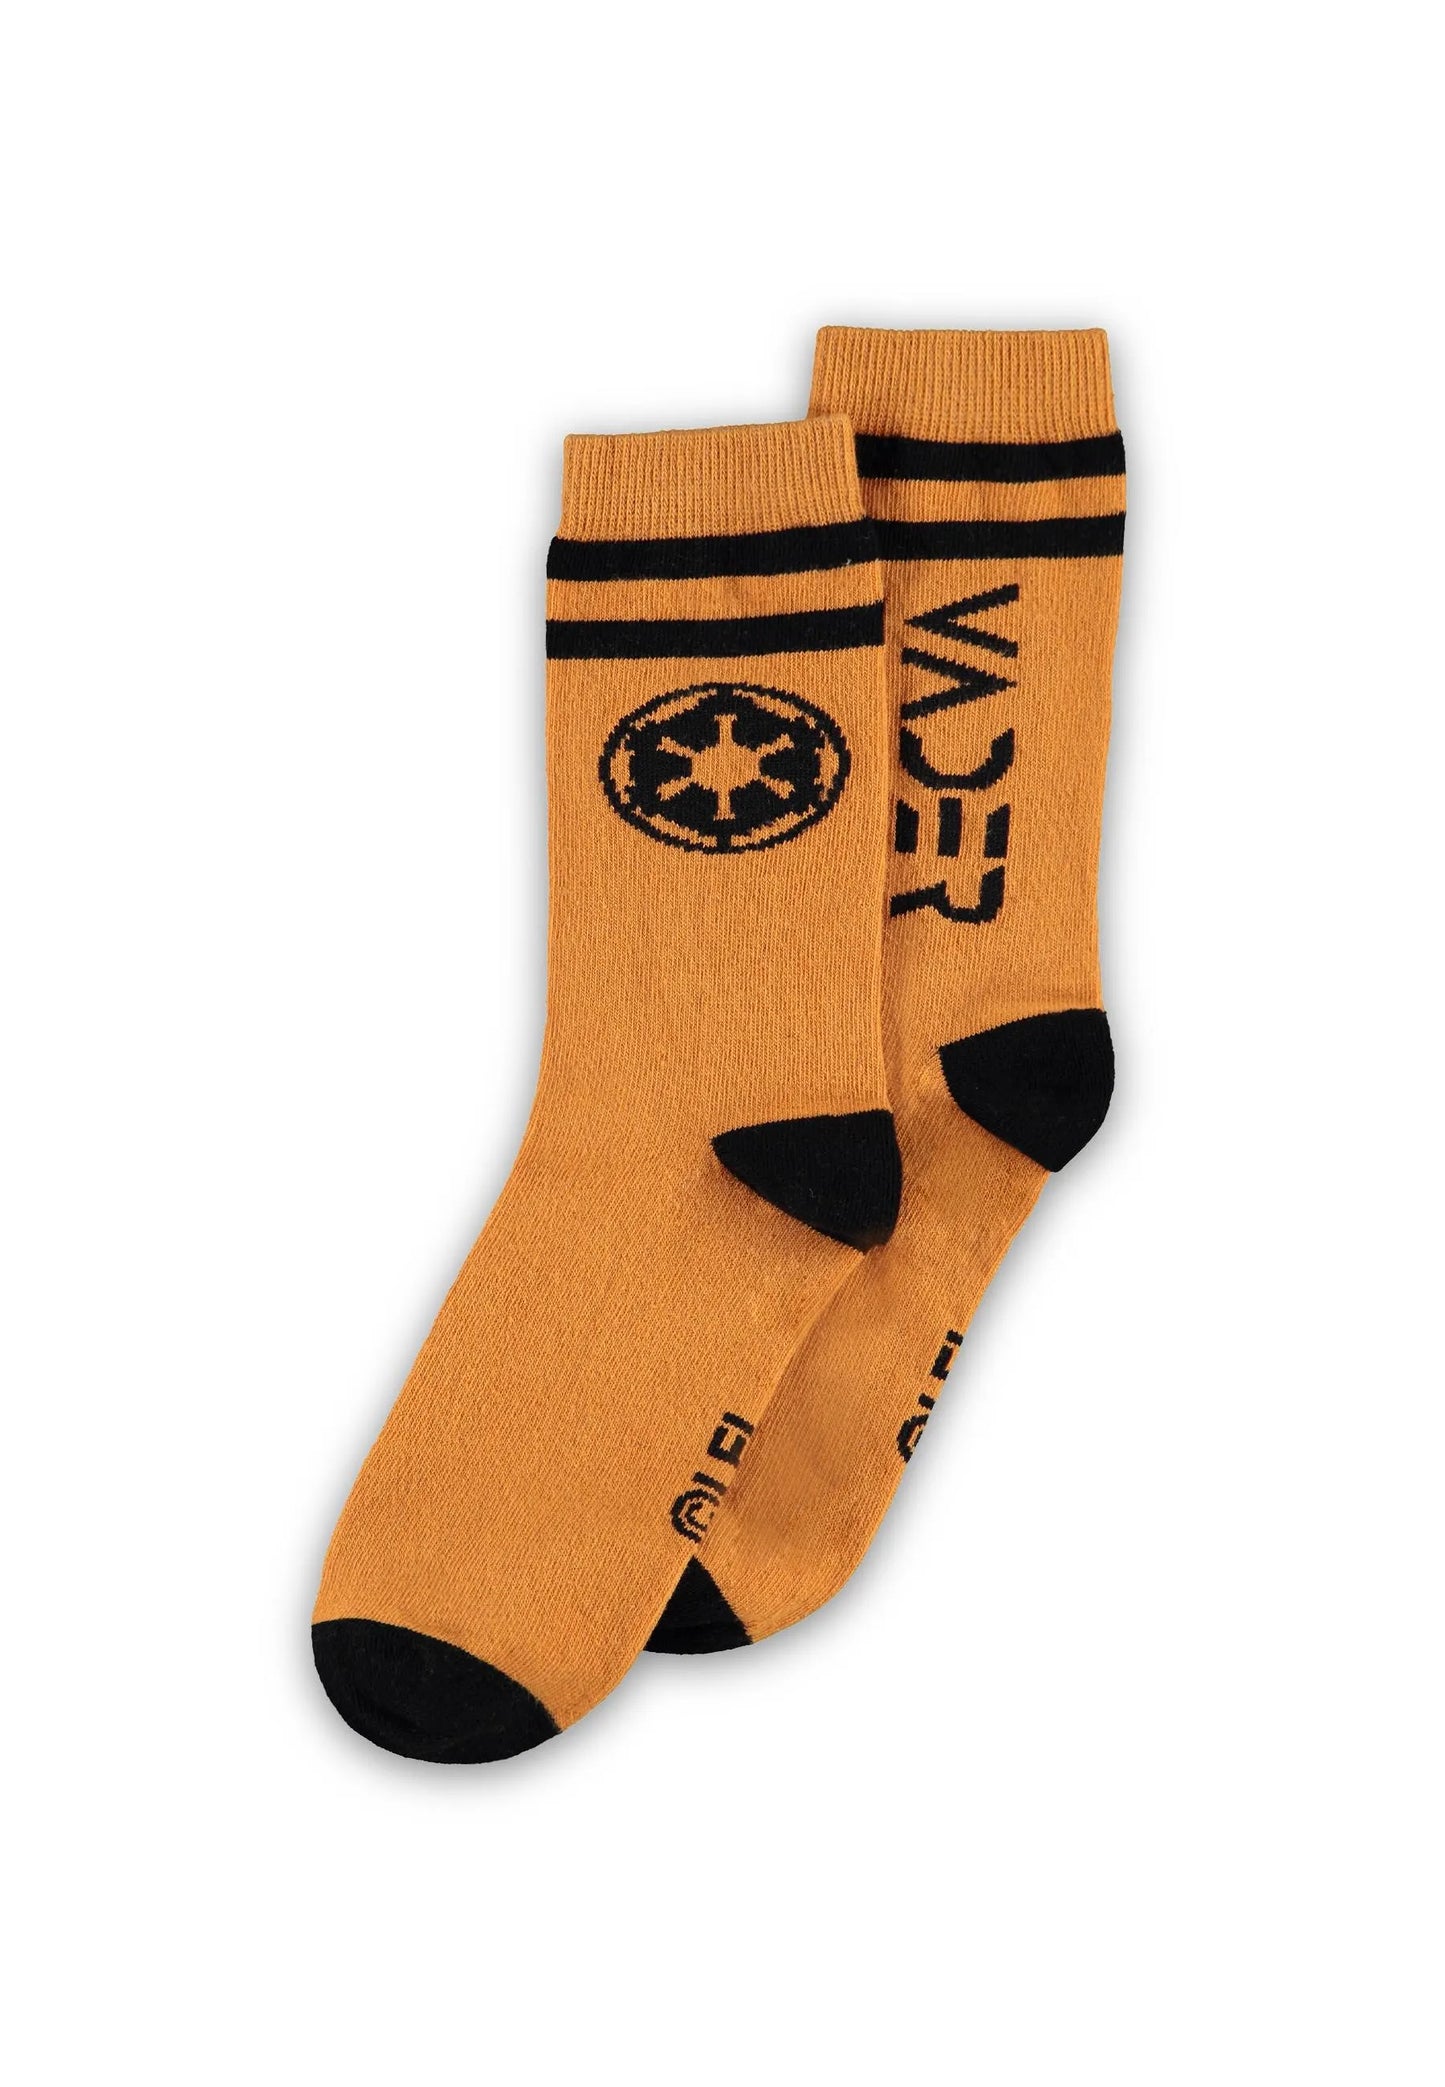 STAR WARS - Obi Wan Kenobi - Men's Crew Socks (3Pack)